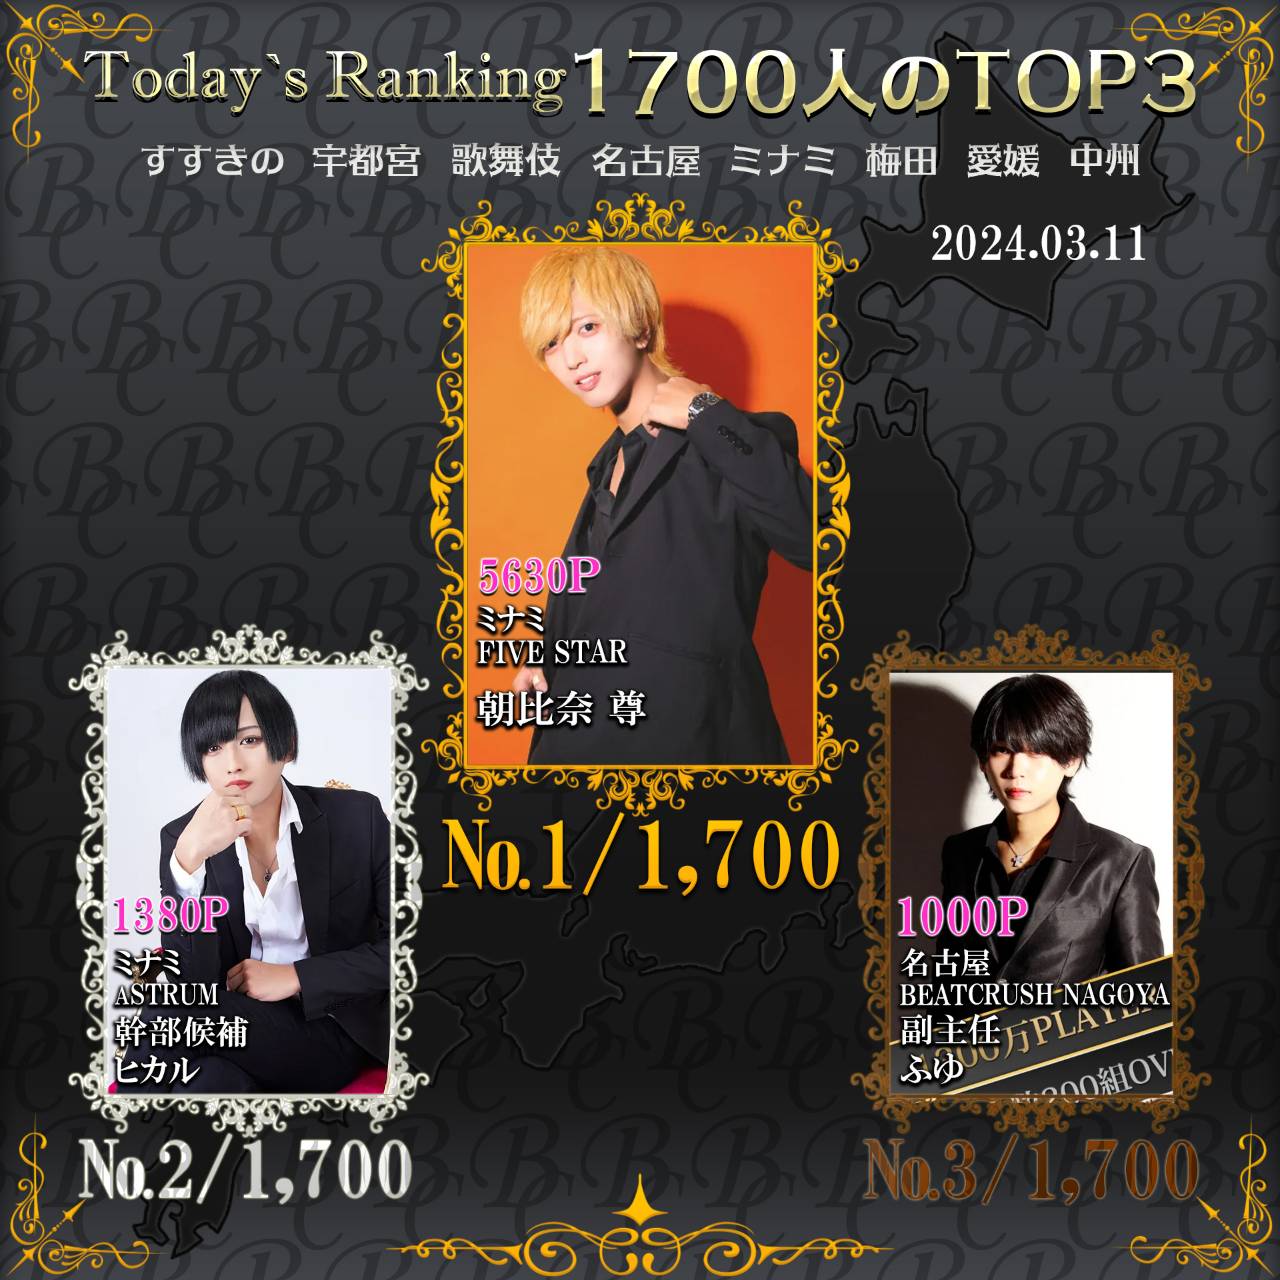 3/11 Today’s Ranking